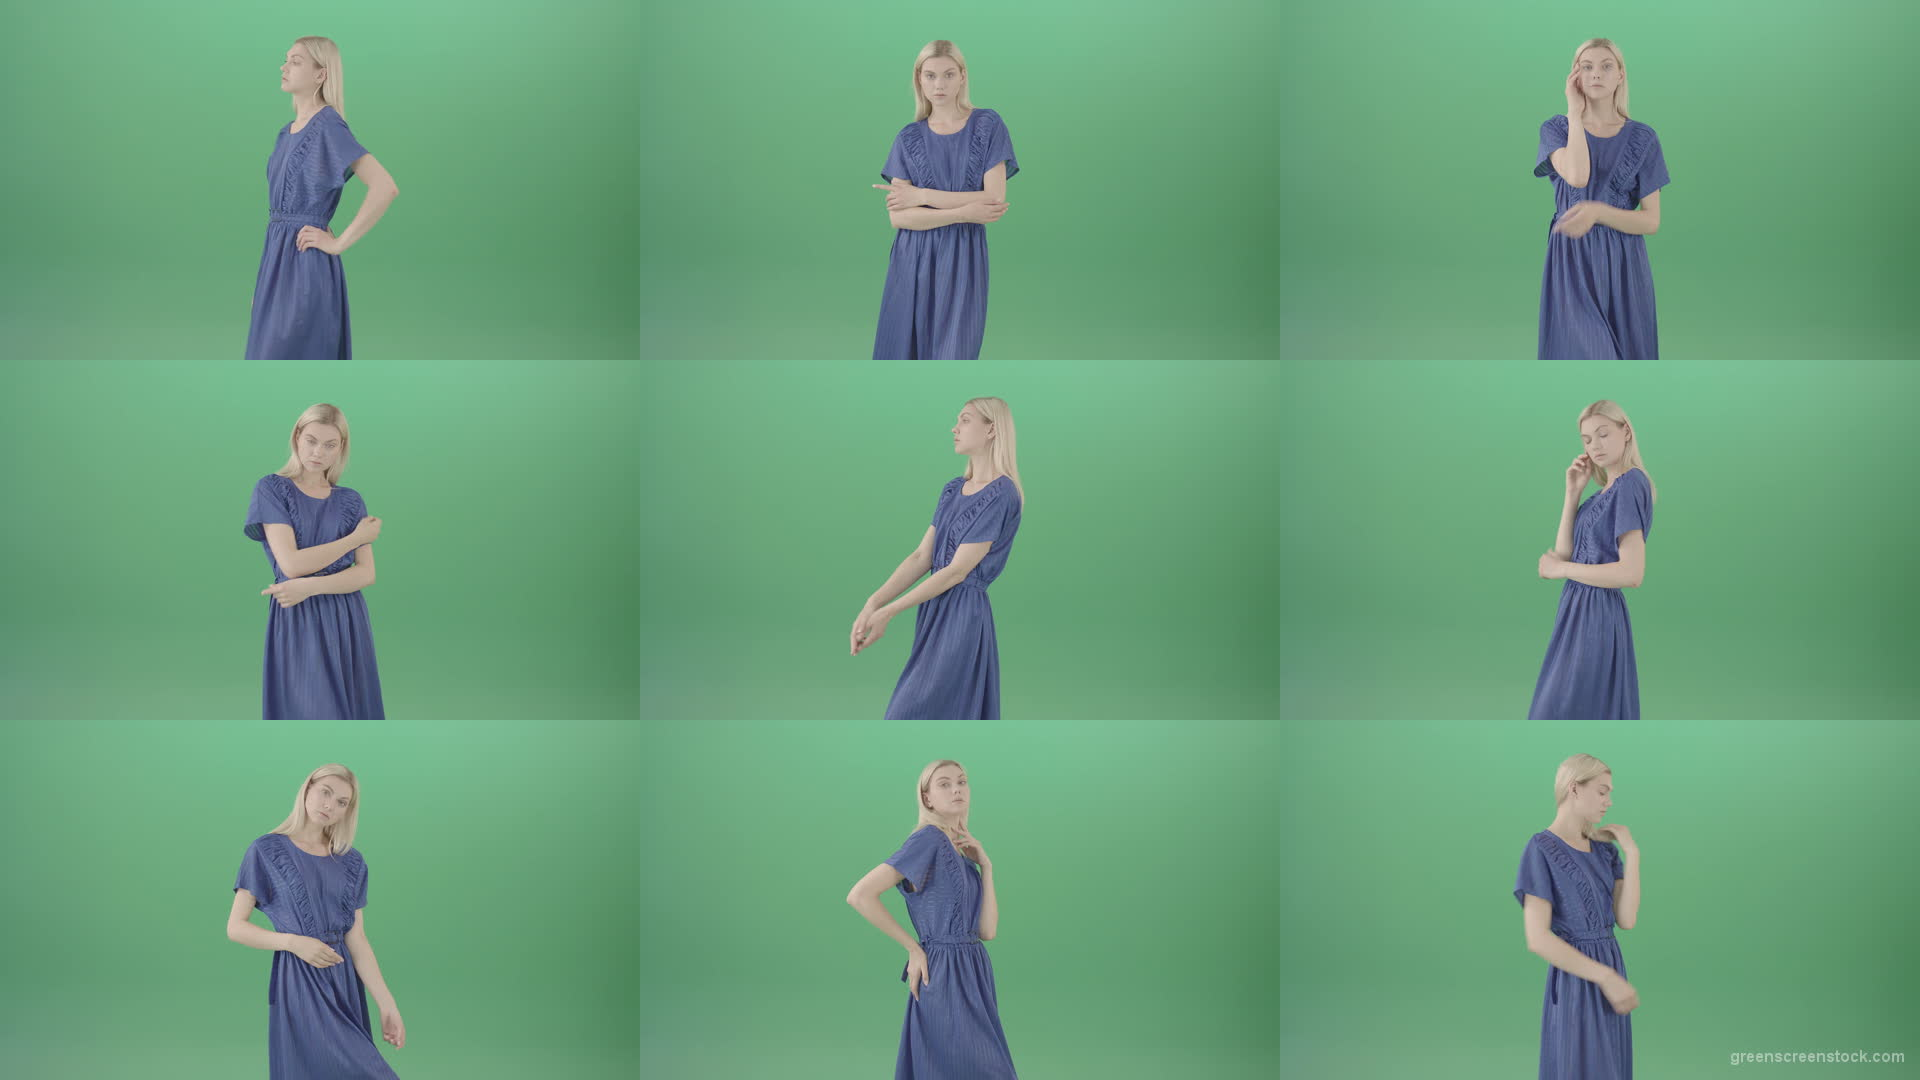 Beautiful-model-housewife-posing-on-green-screen-showing-gestures-4K-Video-Footage-1920 Green Screen Stock